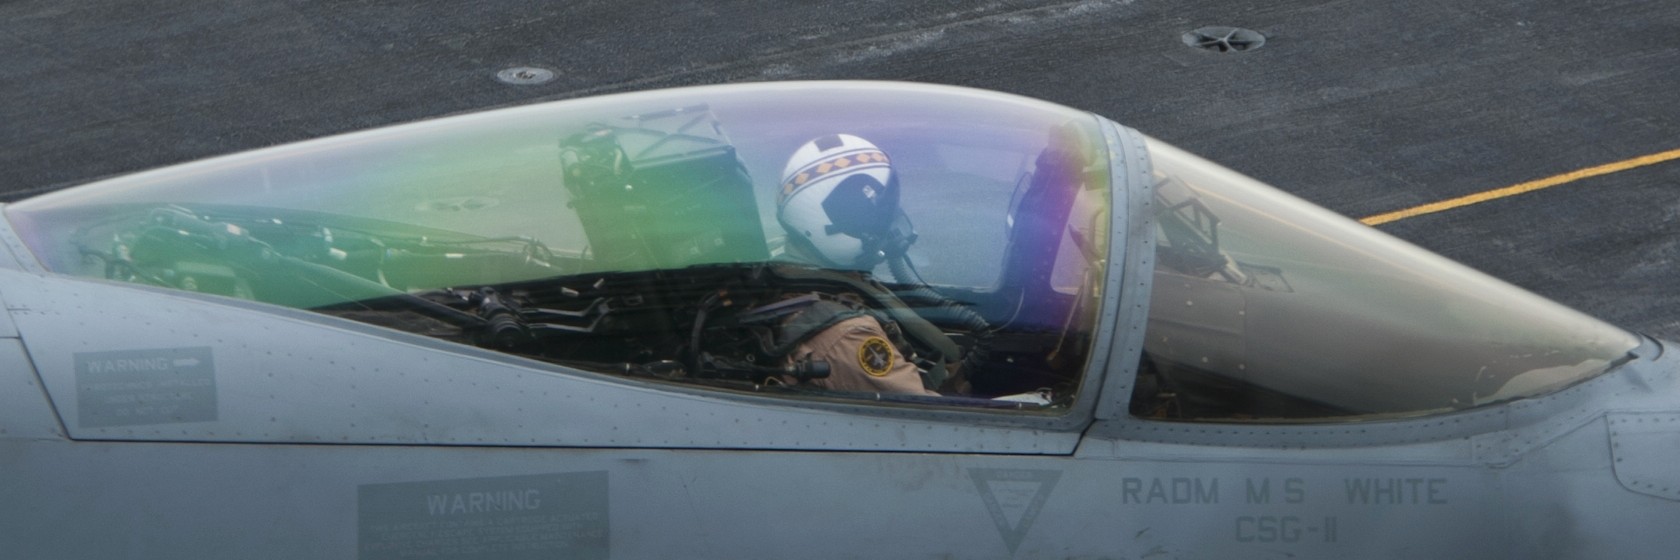 vmfa-323 death rattlers marine fighter attack squadron f/a-18c hornet cvw-11 uss nimitz cvn-68 144 cockpit